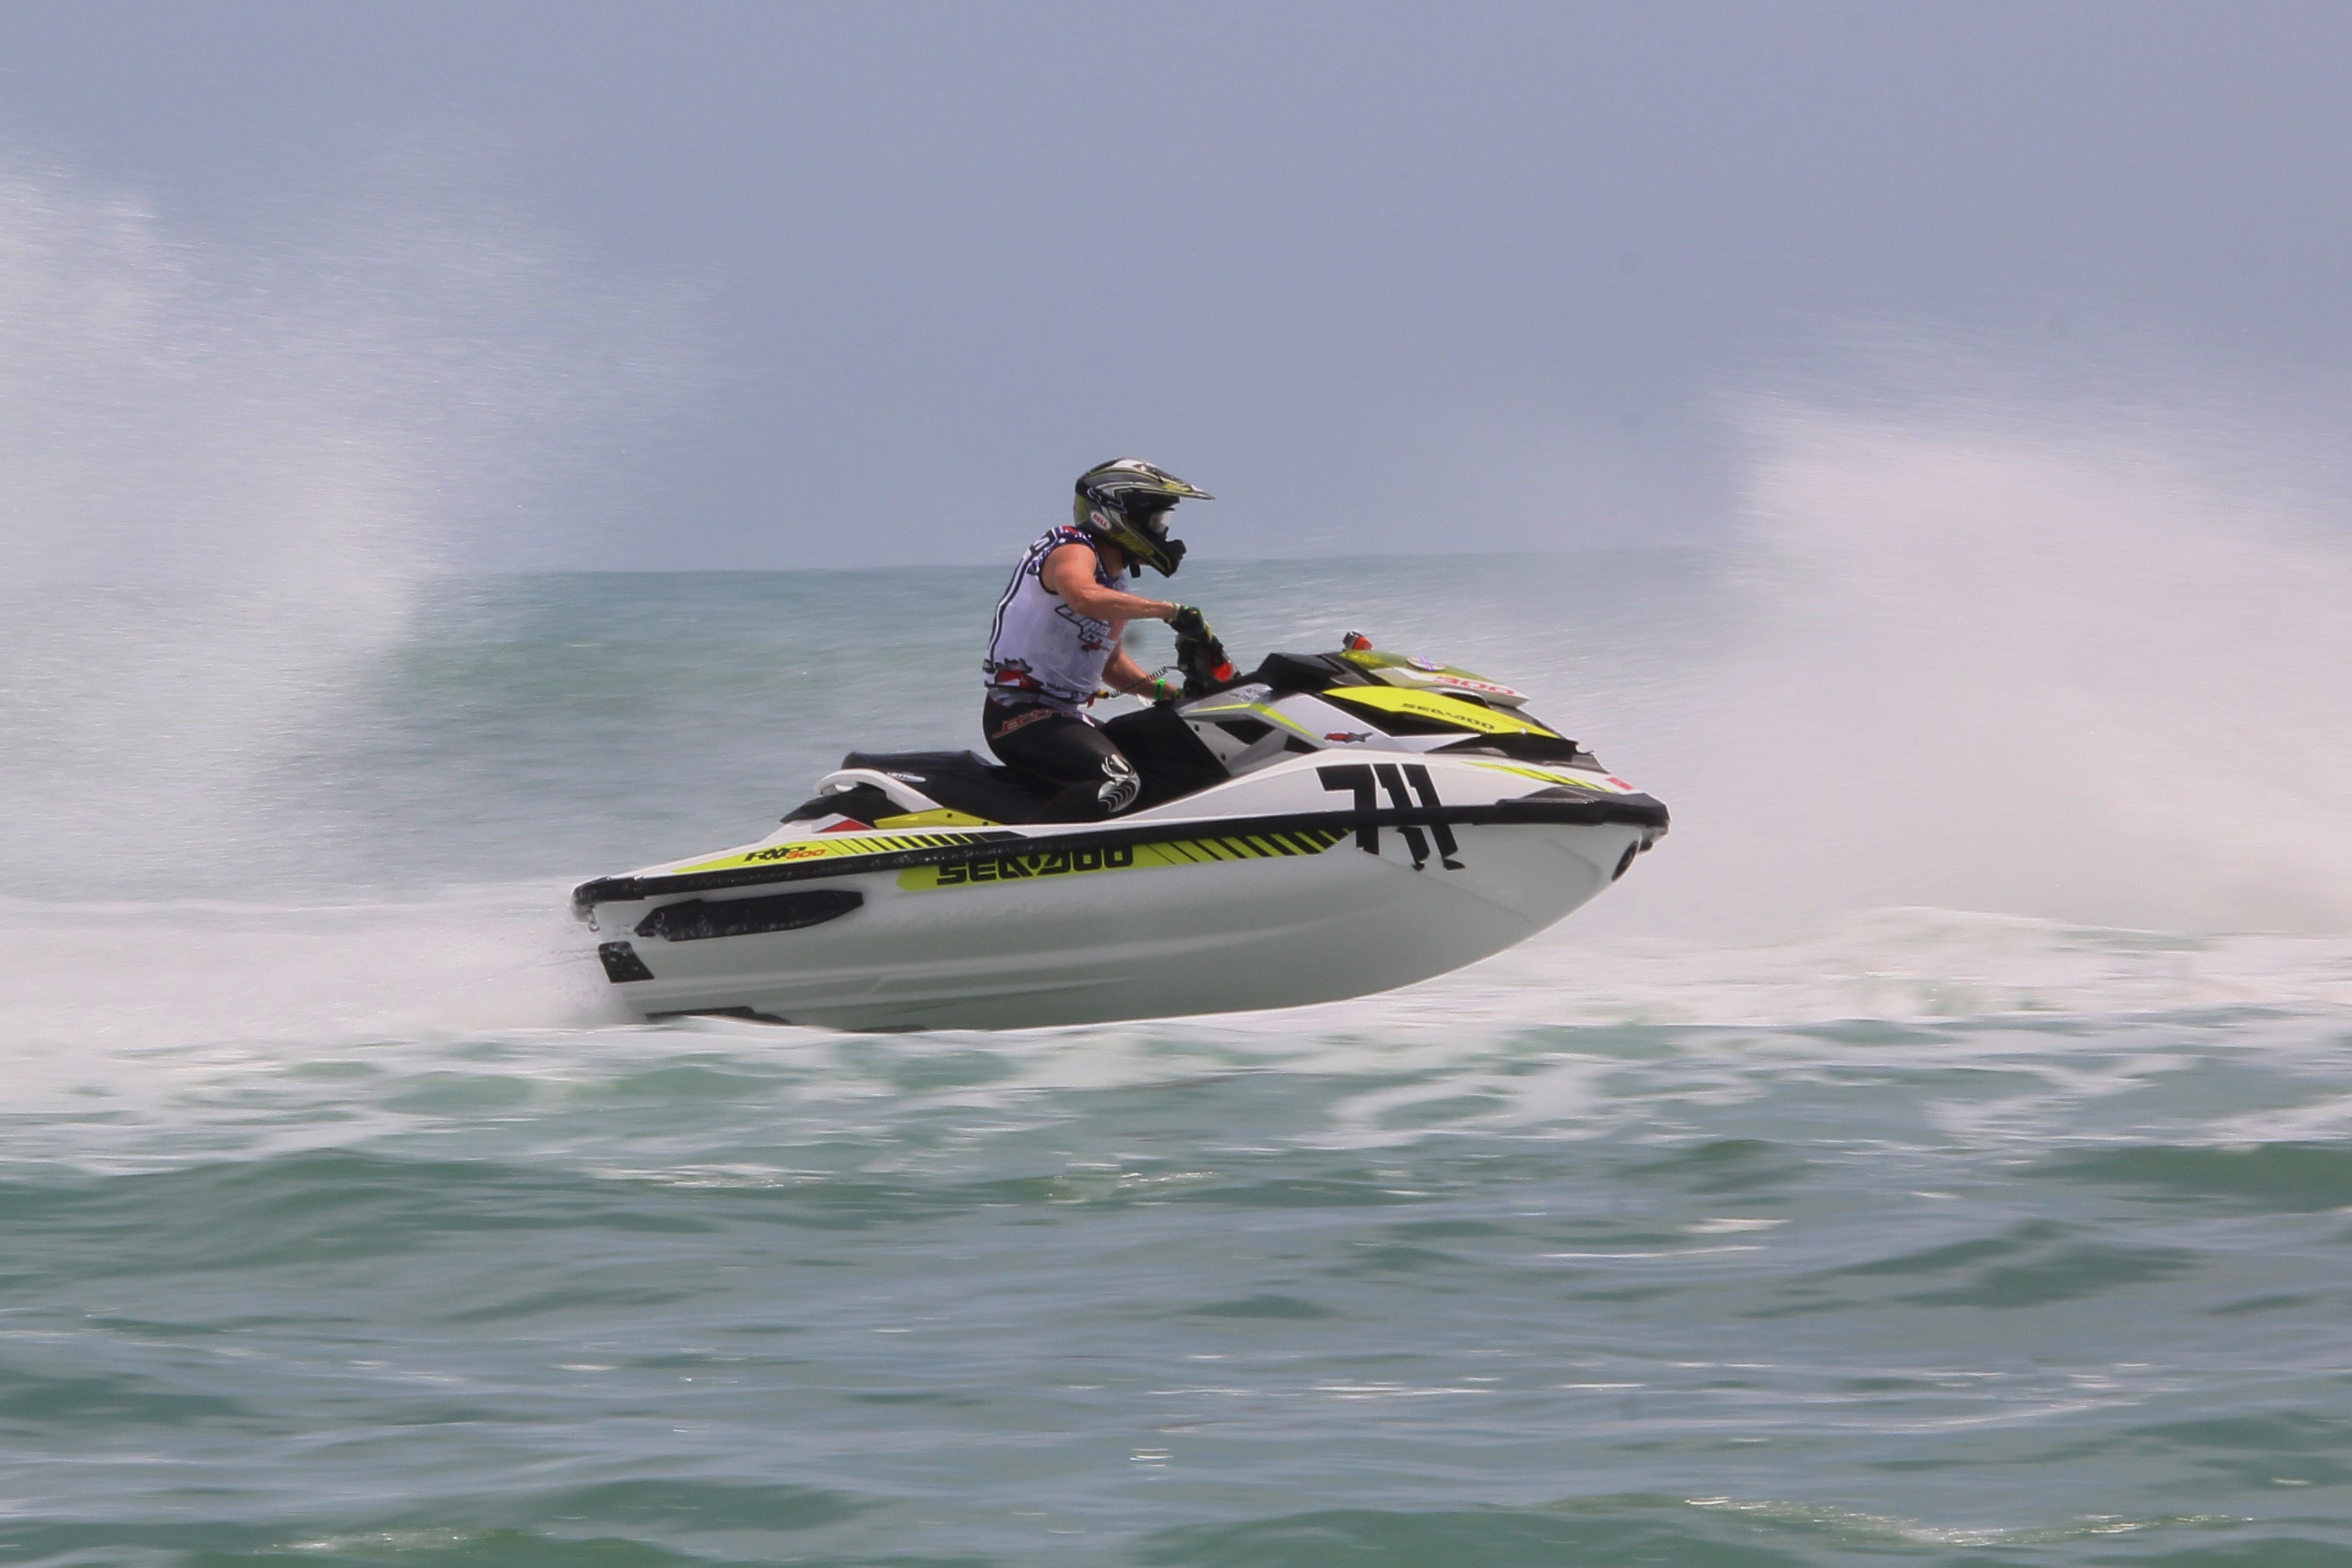 [Gallery] Aqua X Racing at Daytona – RacingJunk News